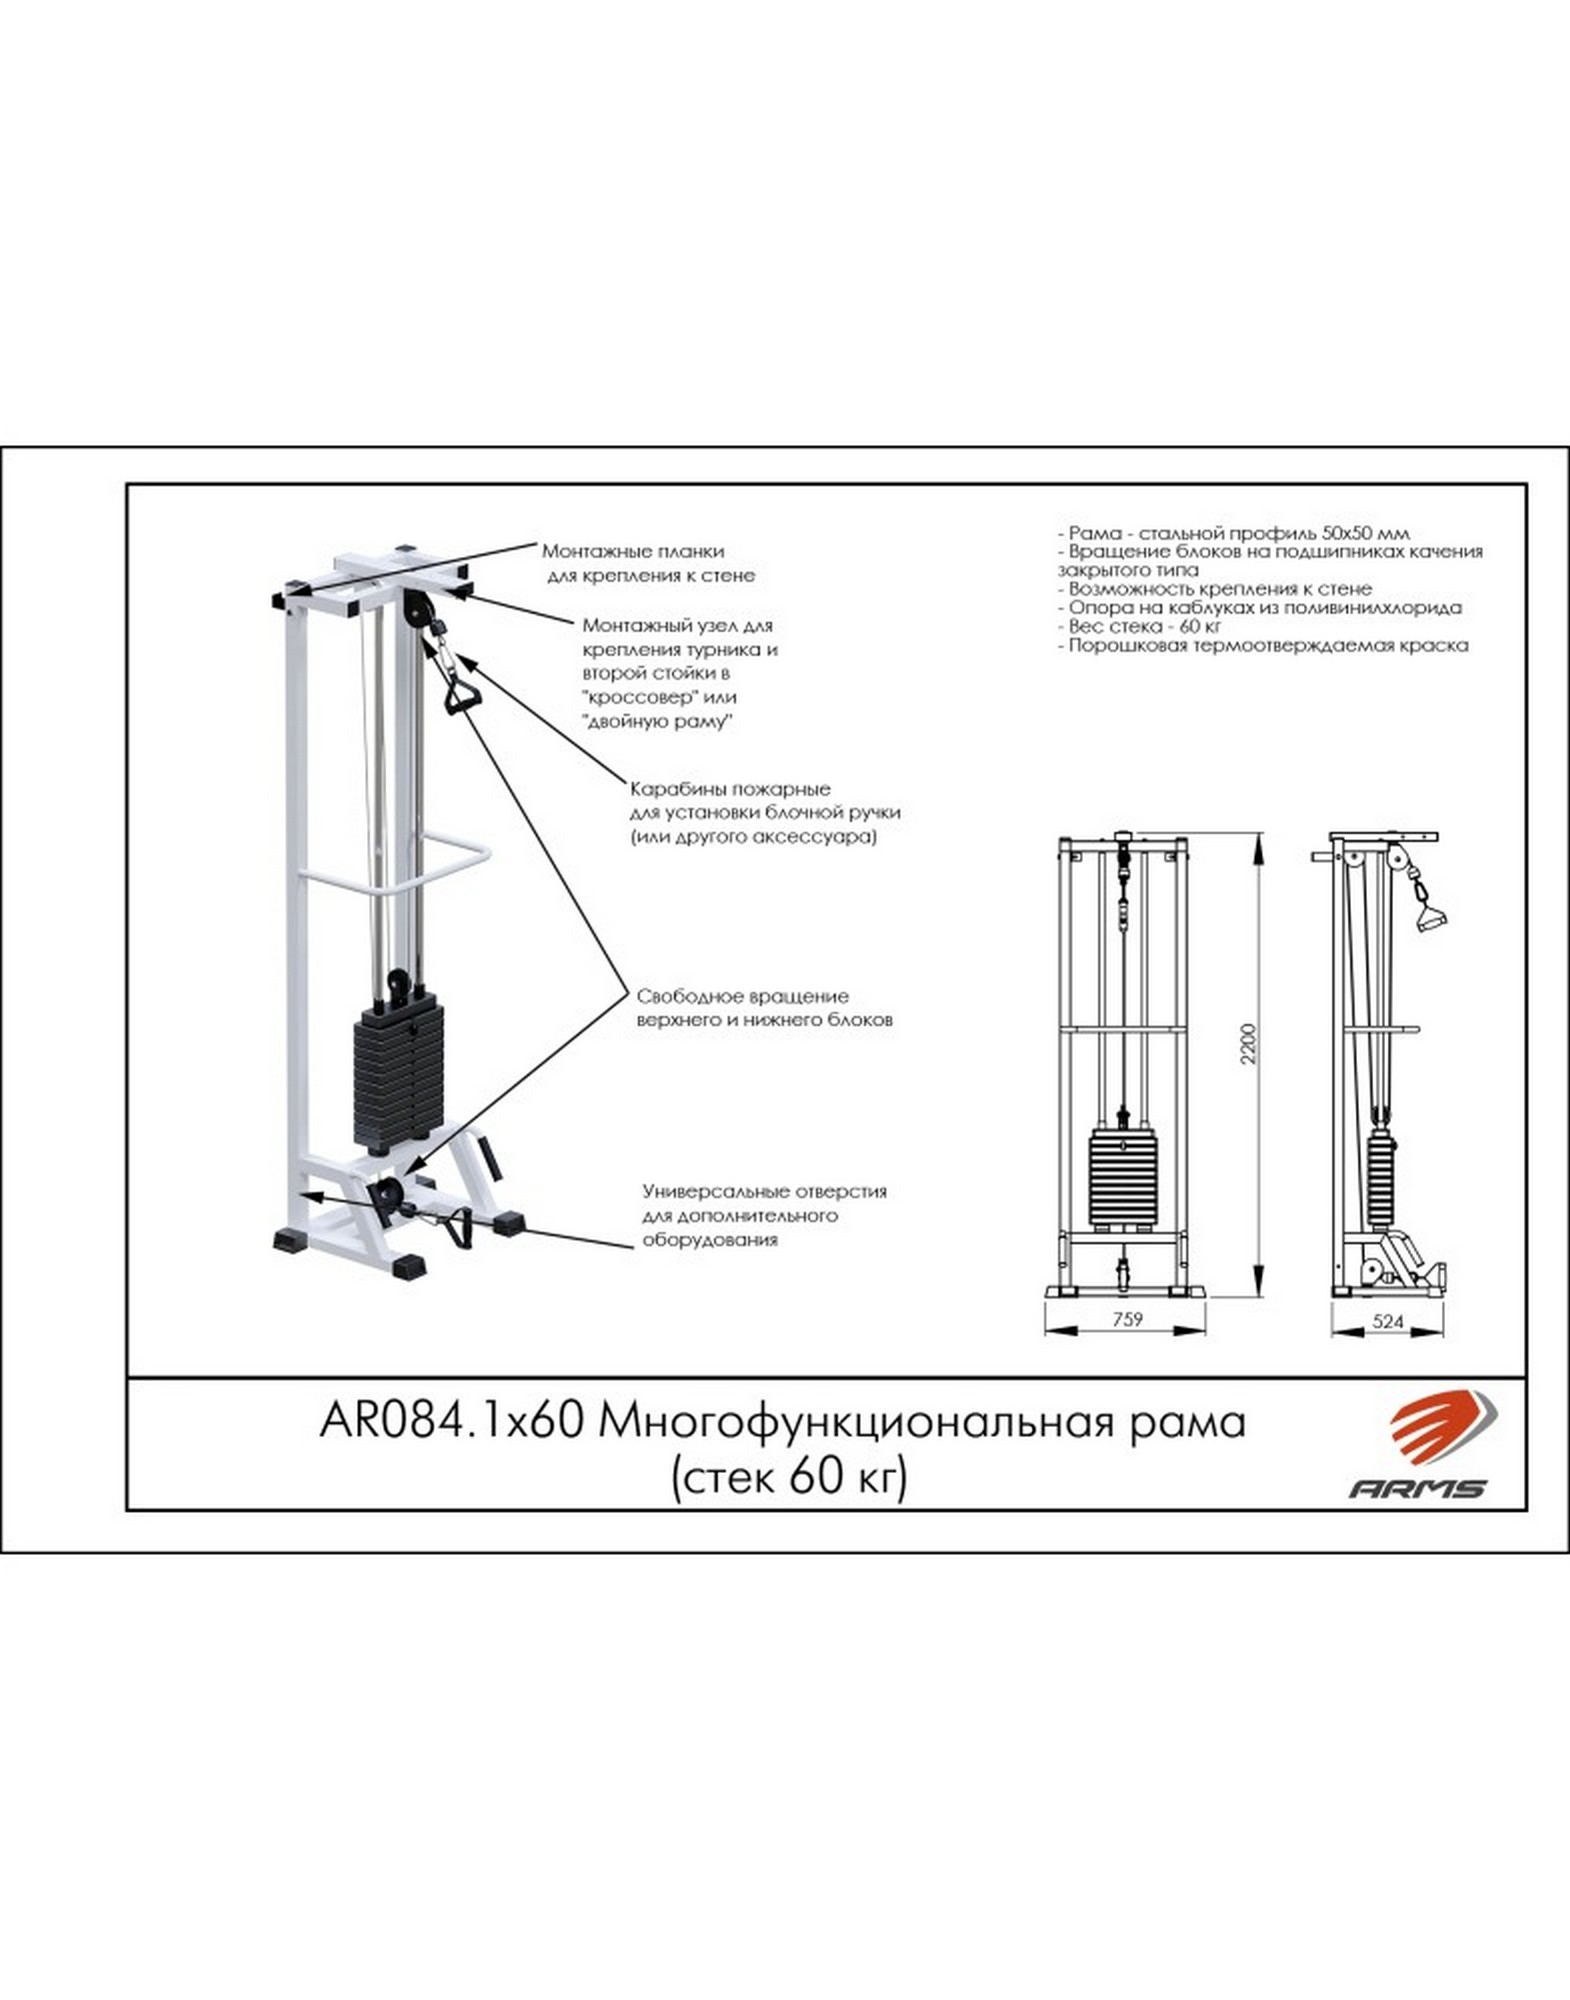 Многофункциональная рама ARMS (стек 60 кг) AR084.1х60 1570_2000